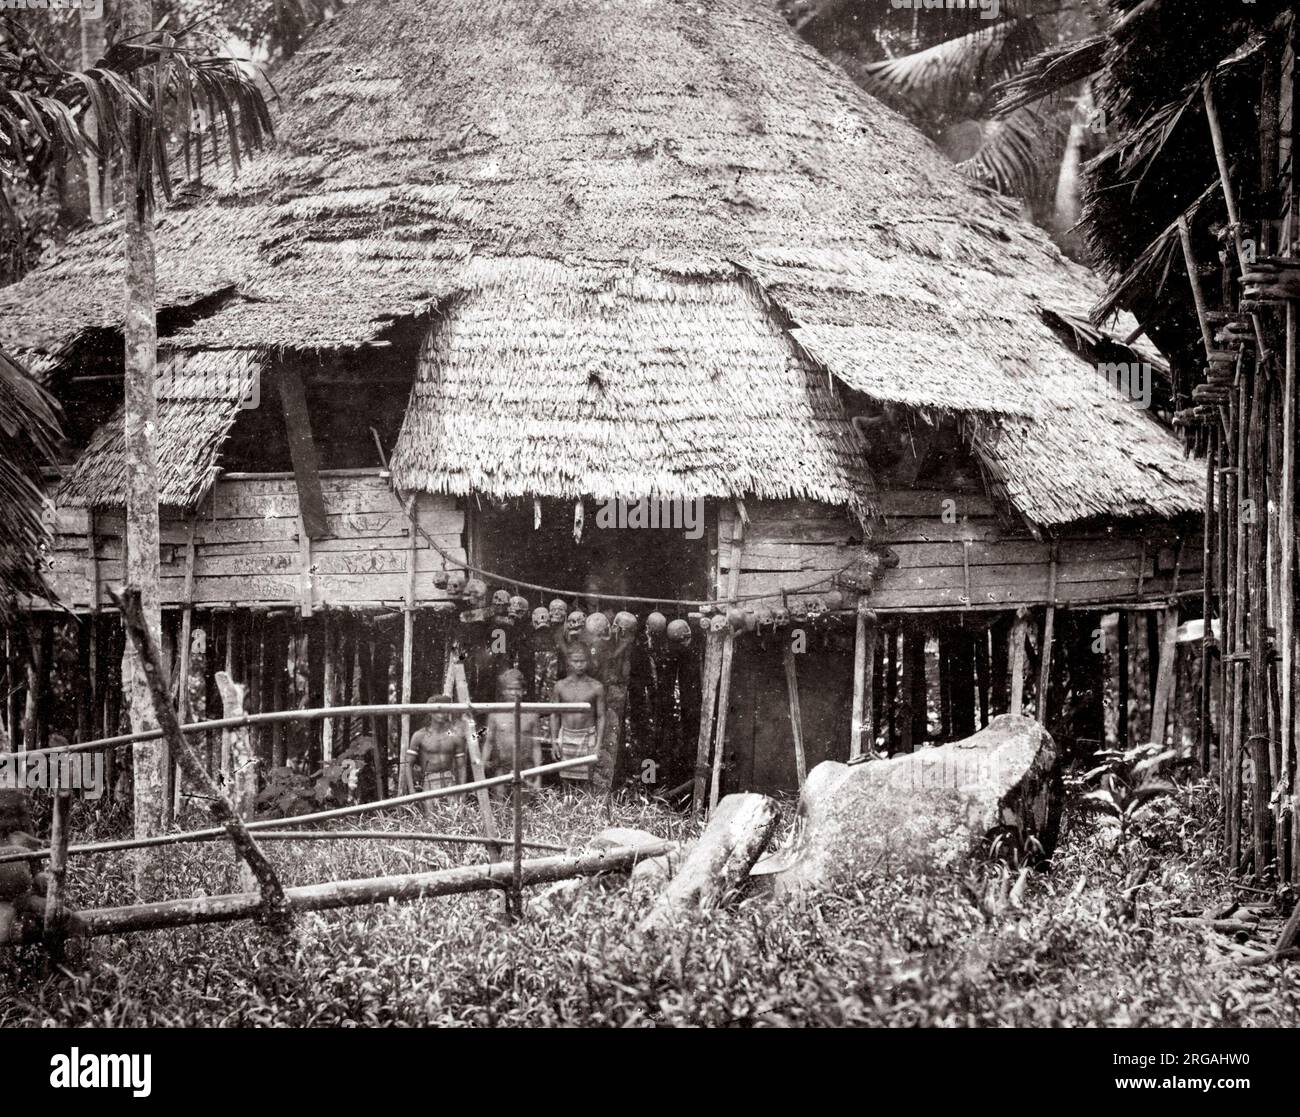 c. 1870s - Indie Orientali olandesi, Indonesia Sumatra - casa appartenente a membri di una tribù di caccia alla testa con teschi accerchiati sopra l'ingresso, probabilmente tribù di Dayak. Foto Stock